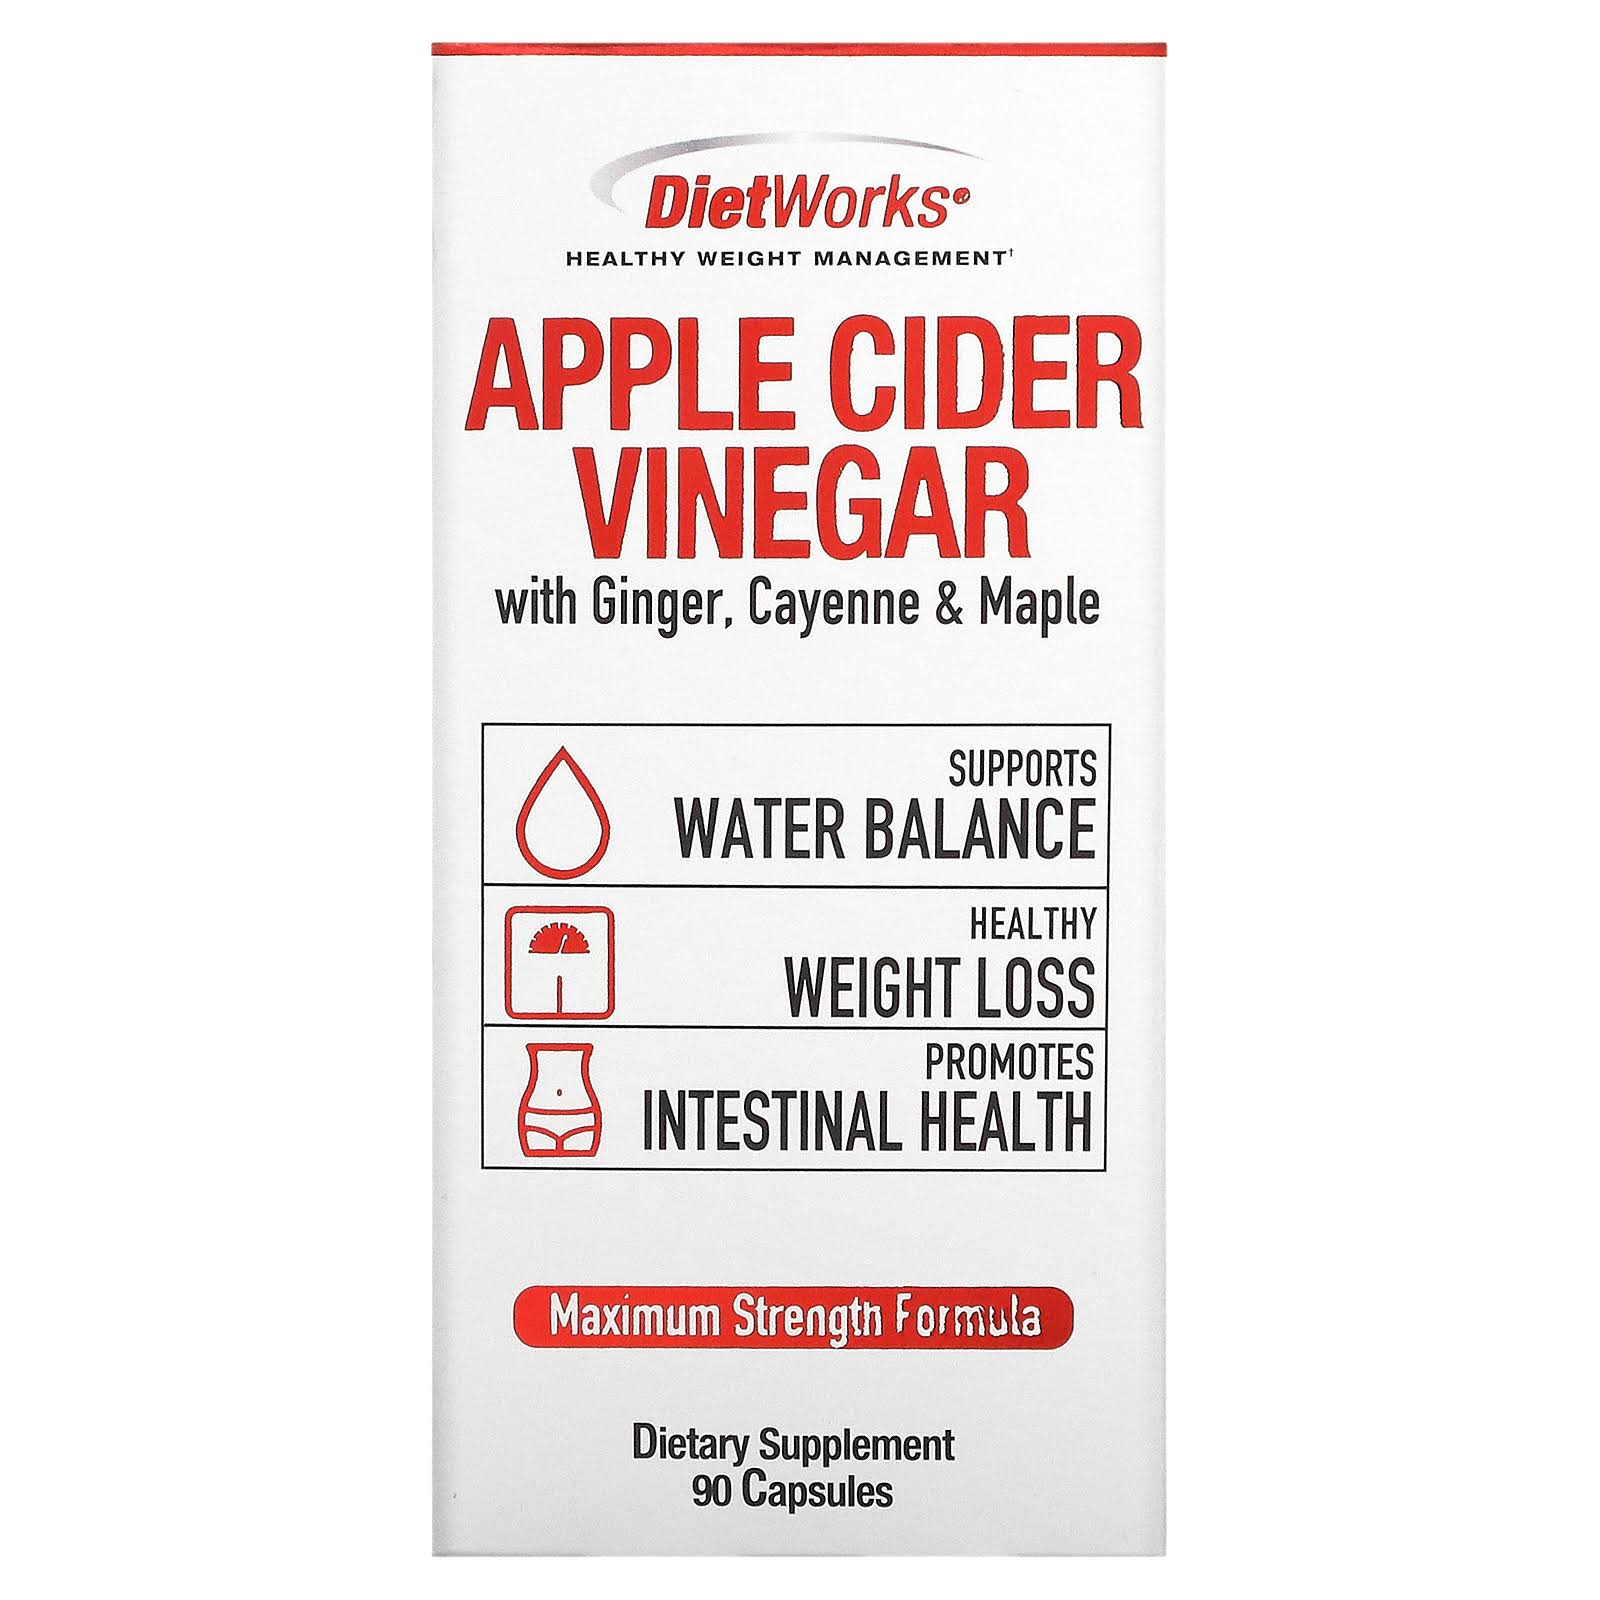 Diet Works Apple Cider Vinegar Supplement - 90 Capsules